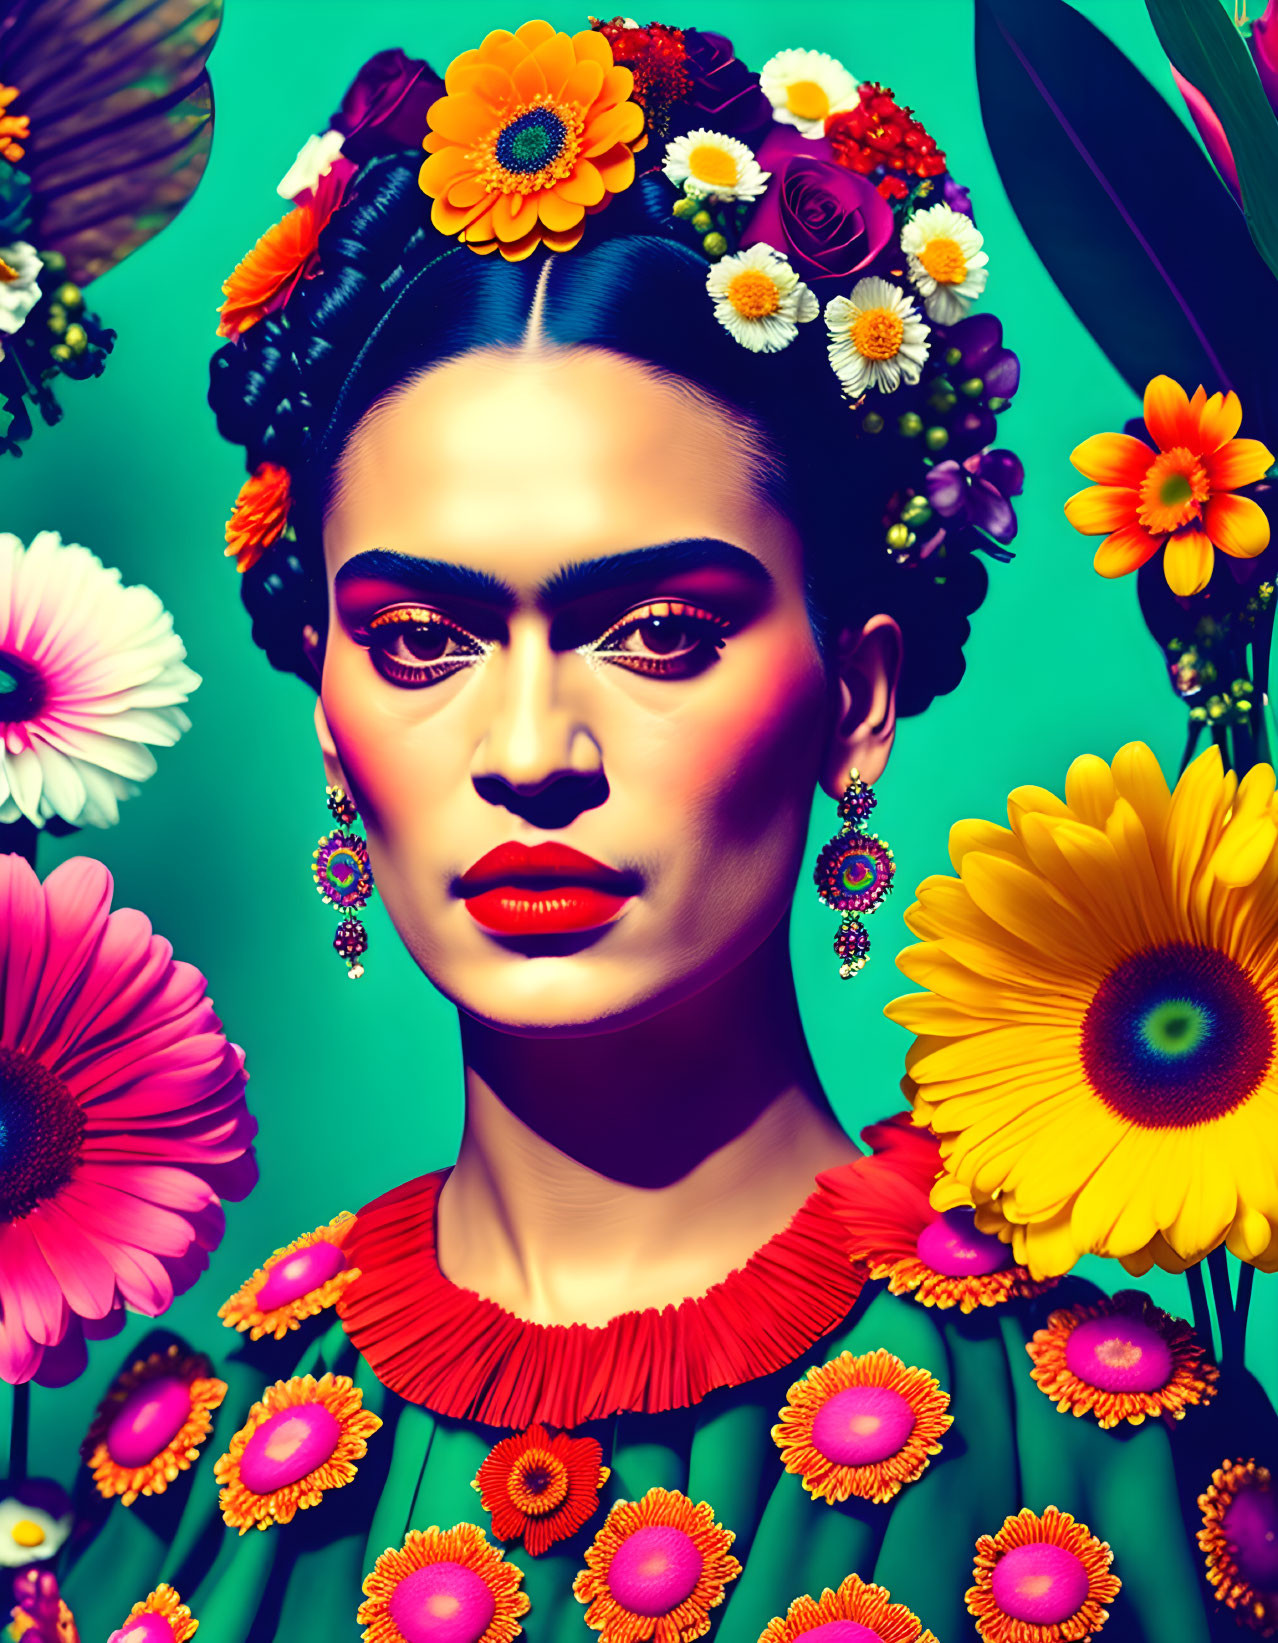 Frida Kahlo styled portrait with flowers